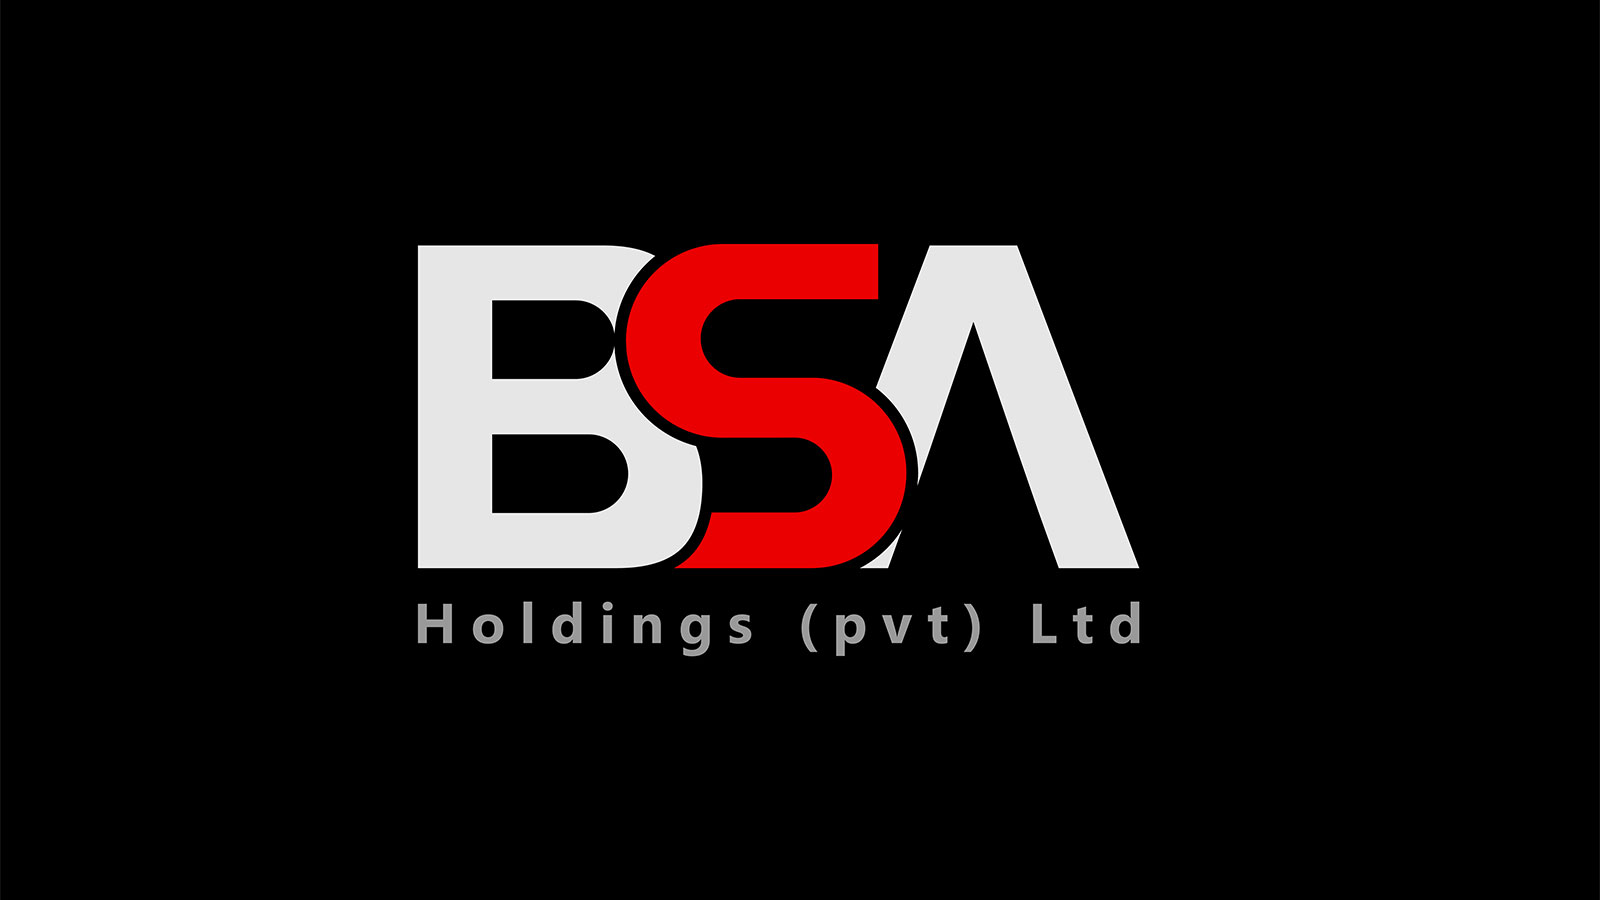 BSA HOLDINGS PVT LTD